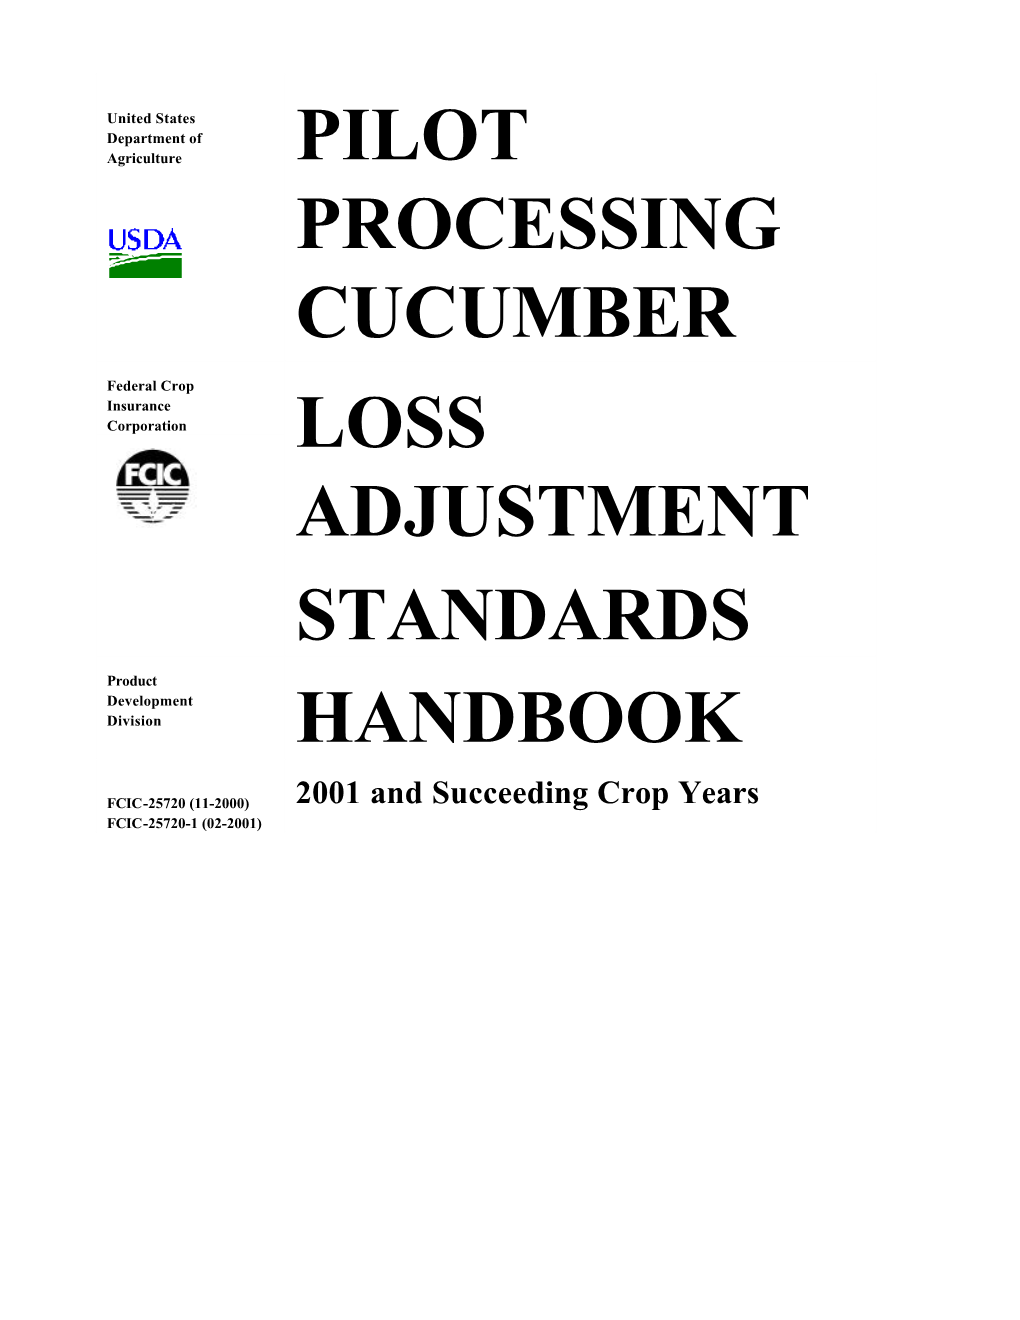 Pilot Processing Cucumber Loss Adjustment Standards Handbook